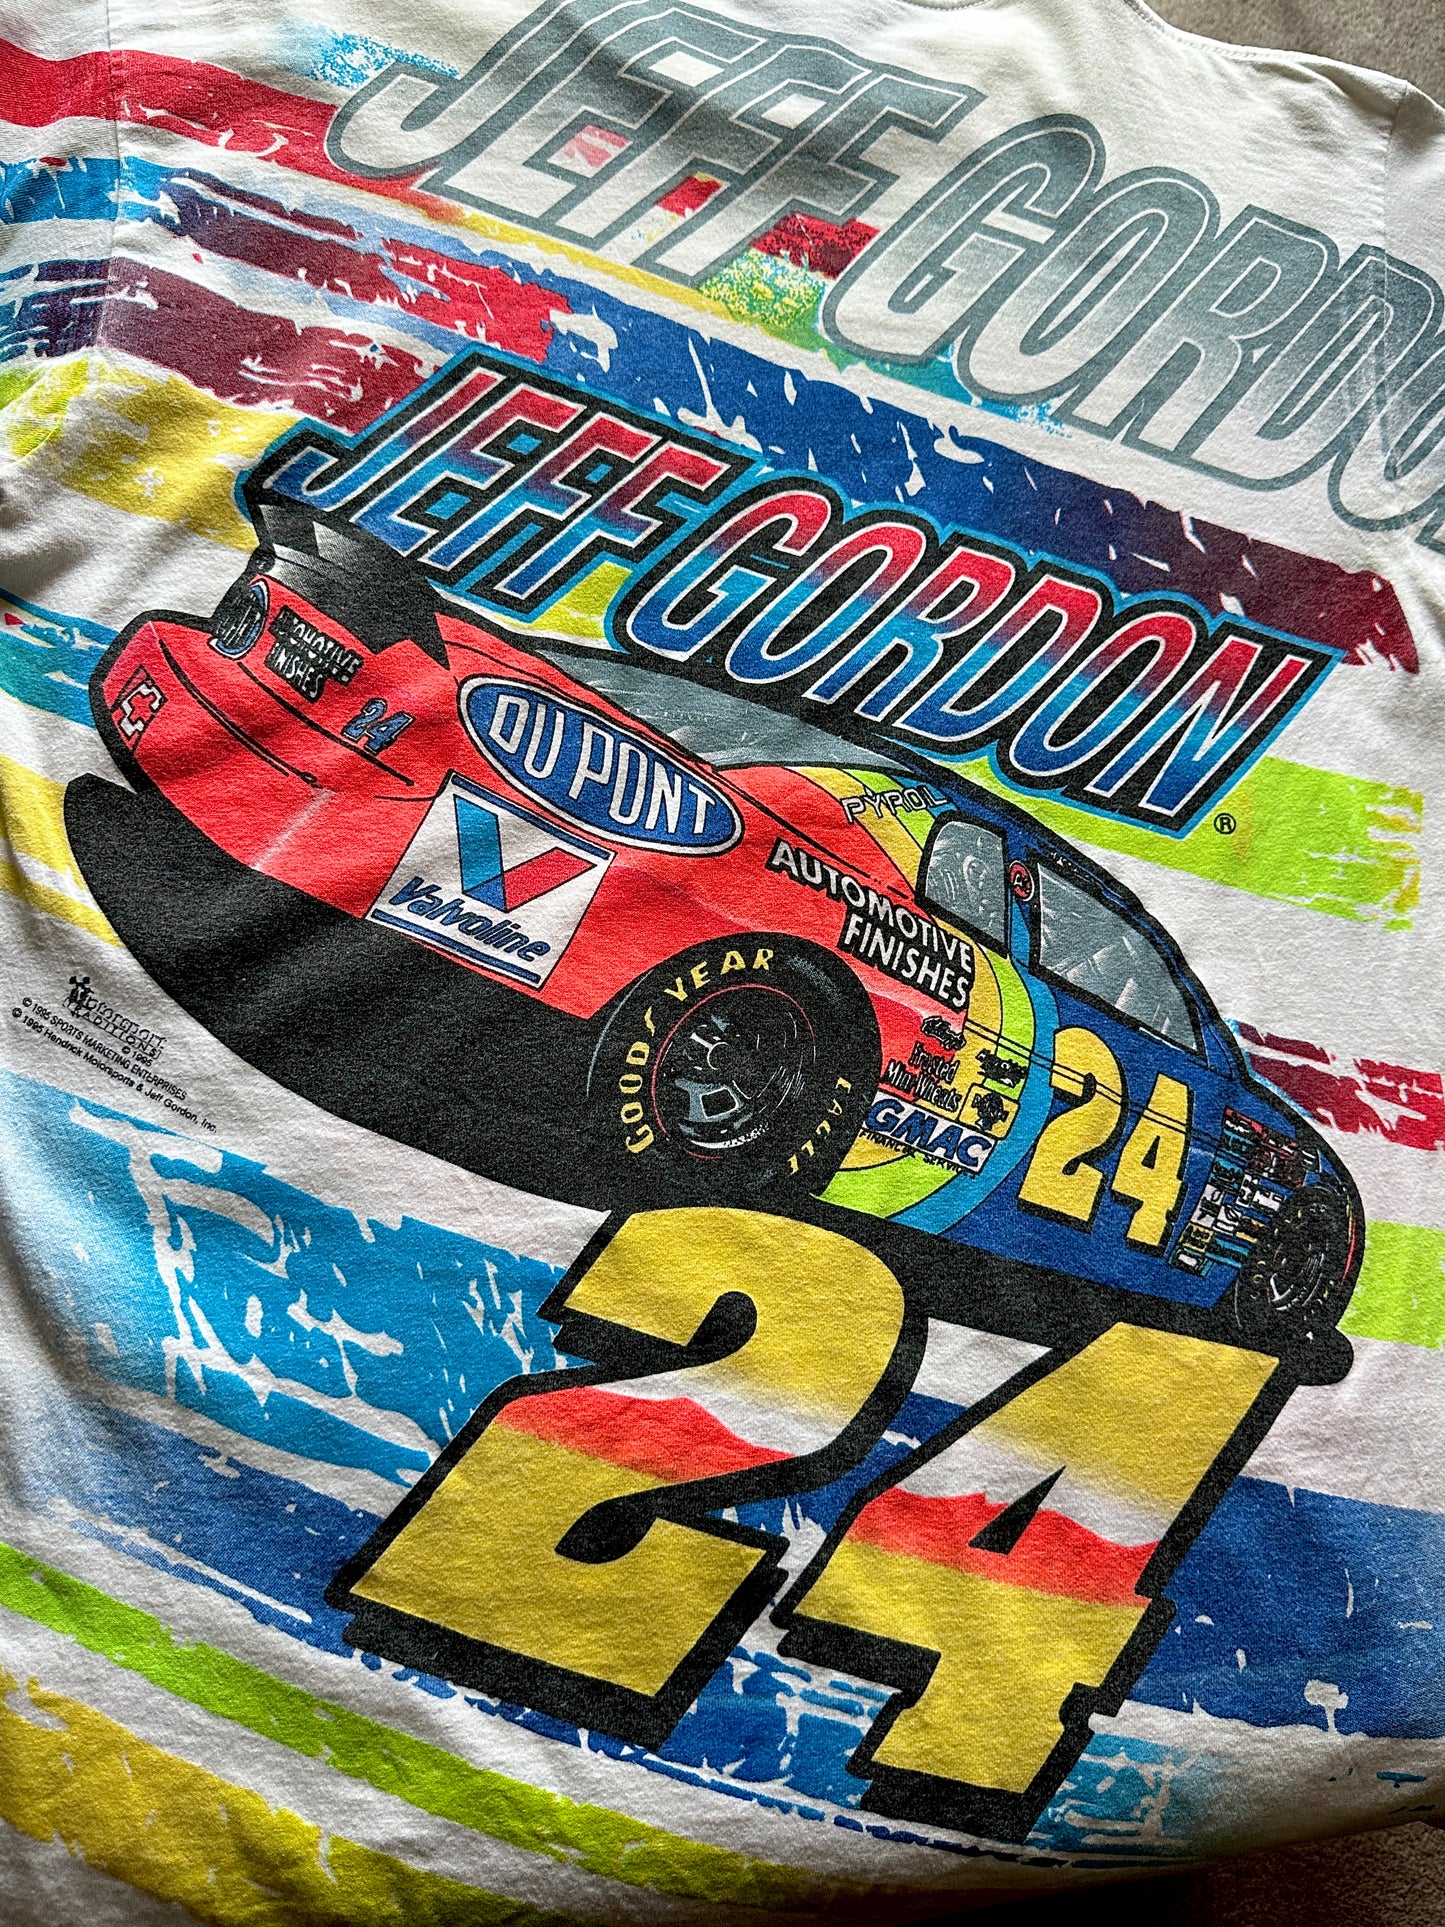 1995 Jeff Gordon NASCAR Winston Cup Champion Motorsports T-Shirt 90's Large